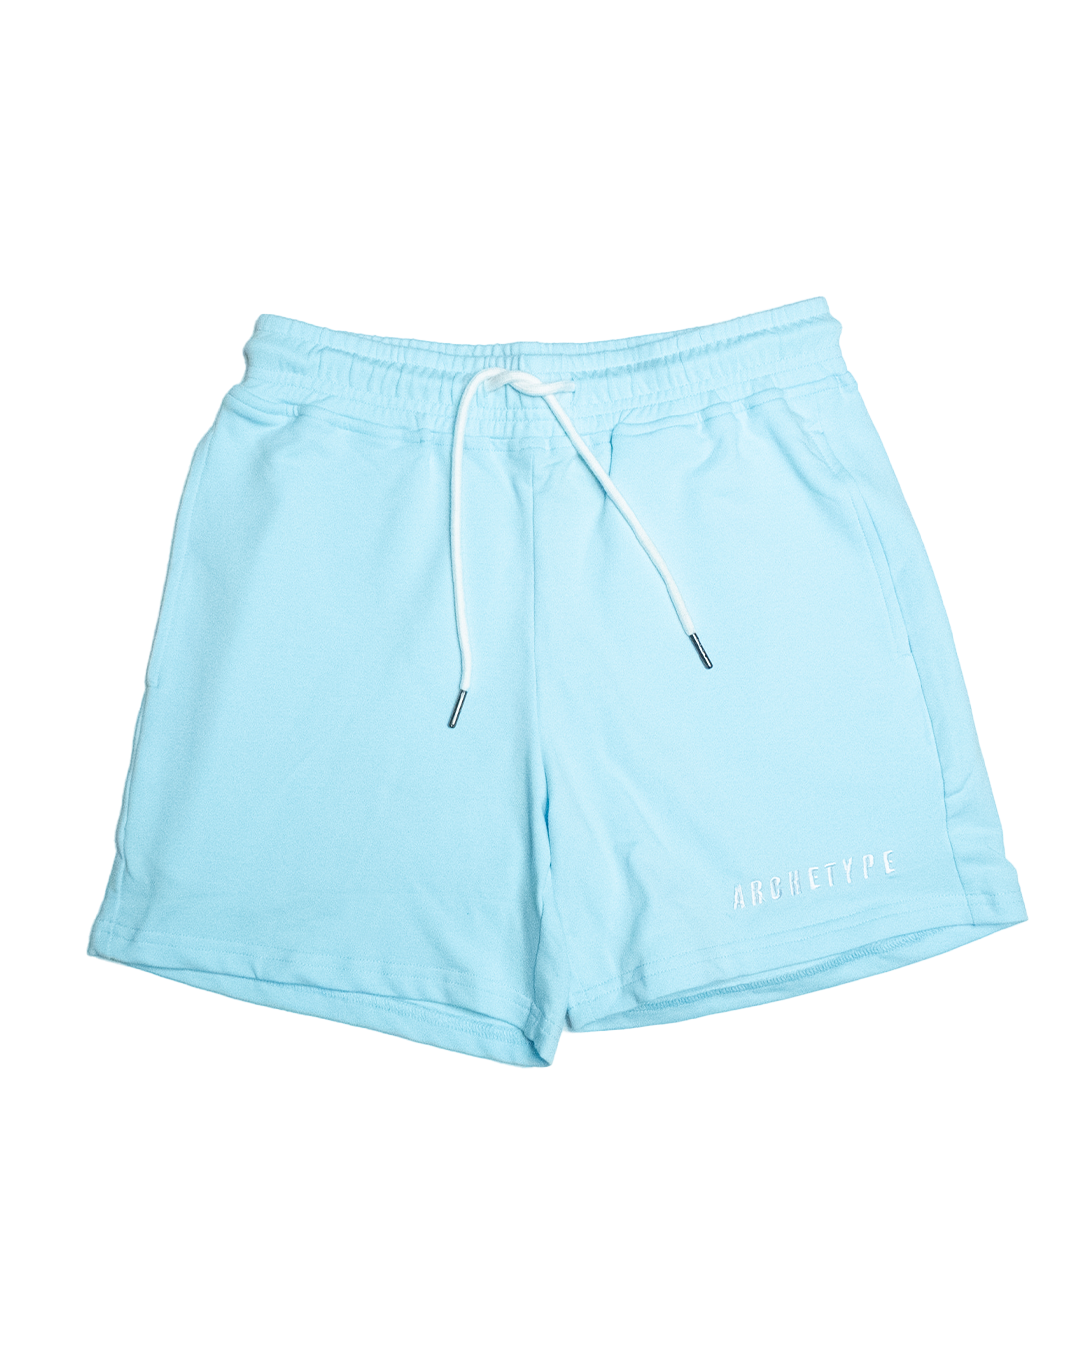 Blue Jay 5" French Cotton Shorts